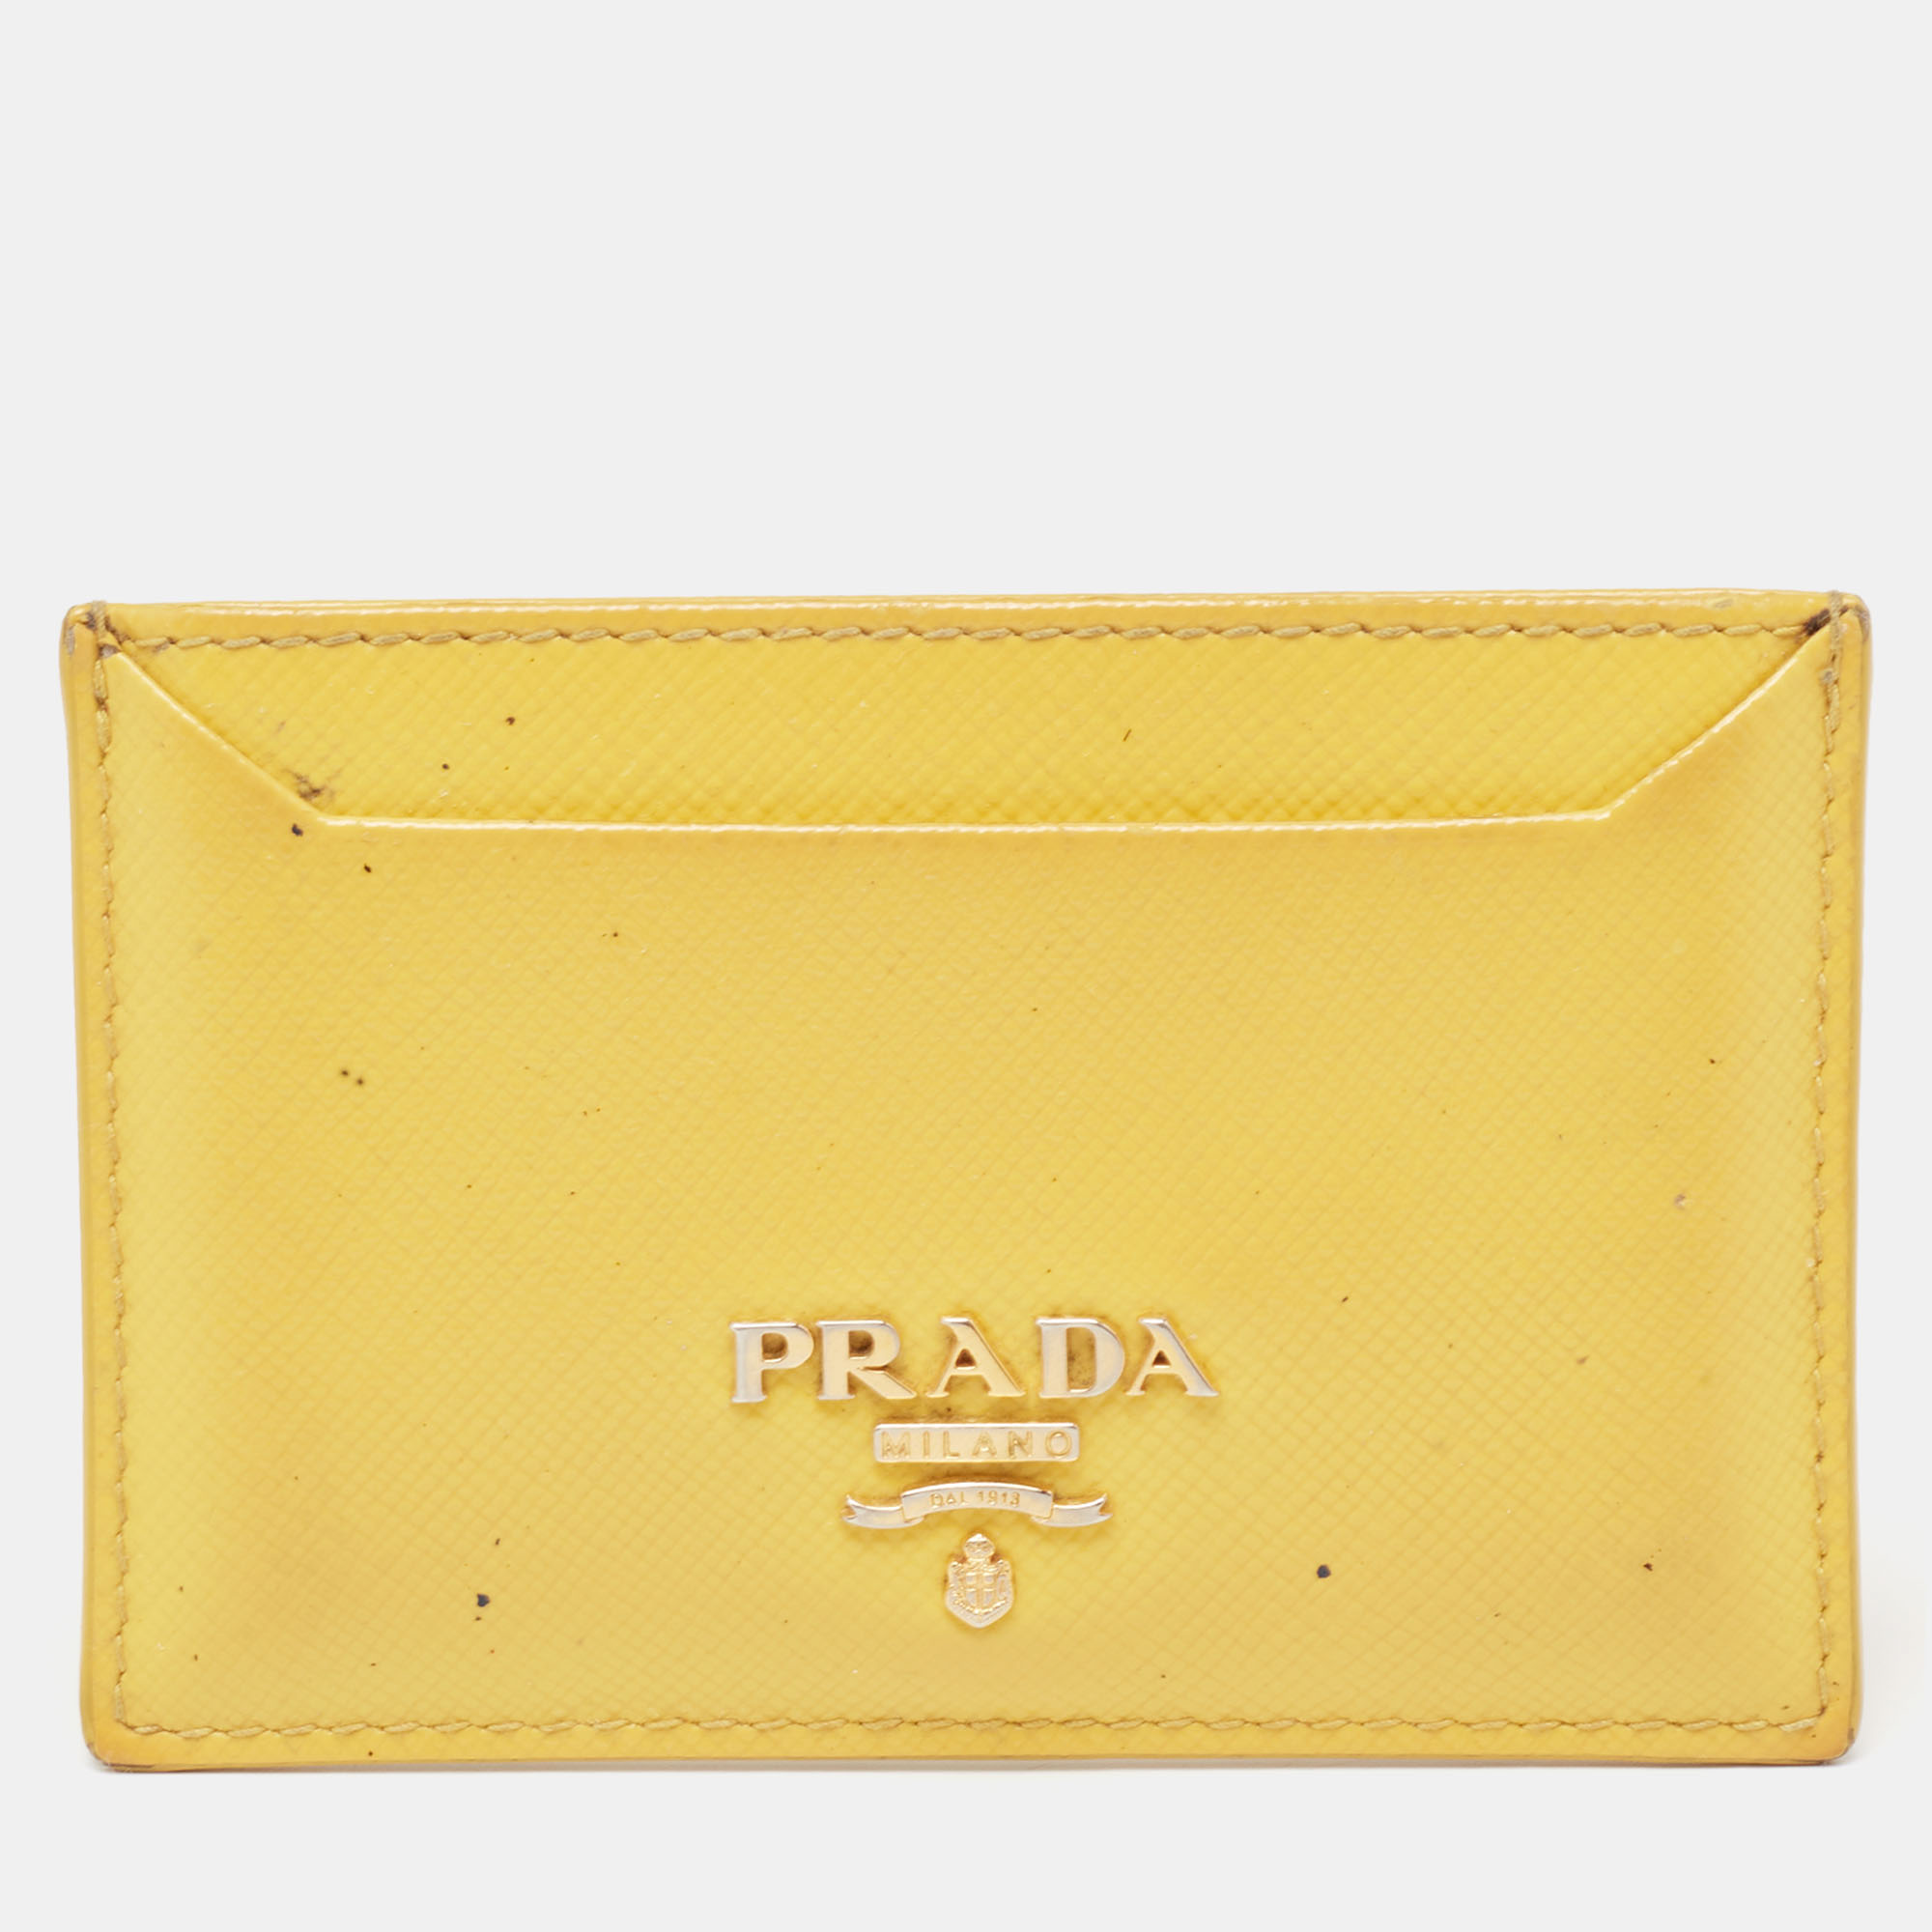 Prada Yellow Saffiano Patent Leather Card Holder